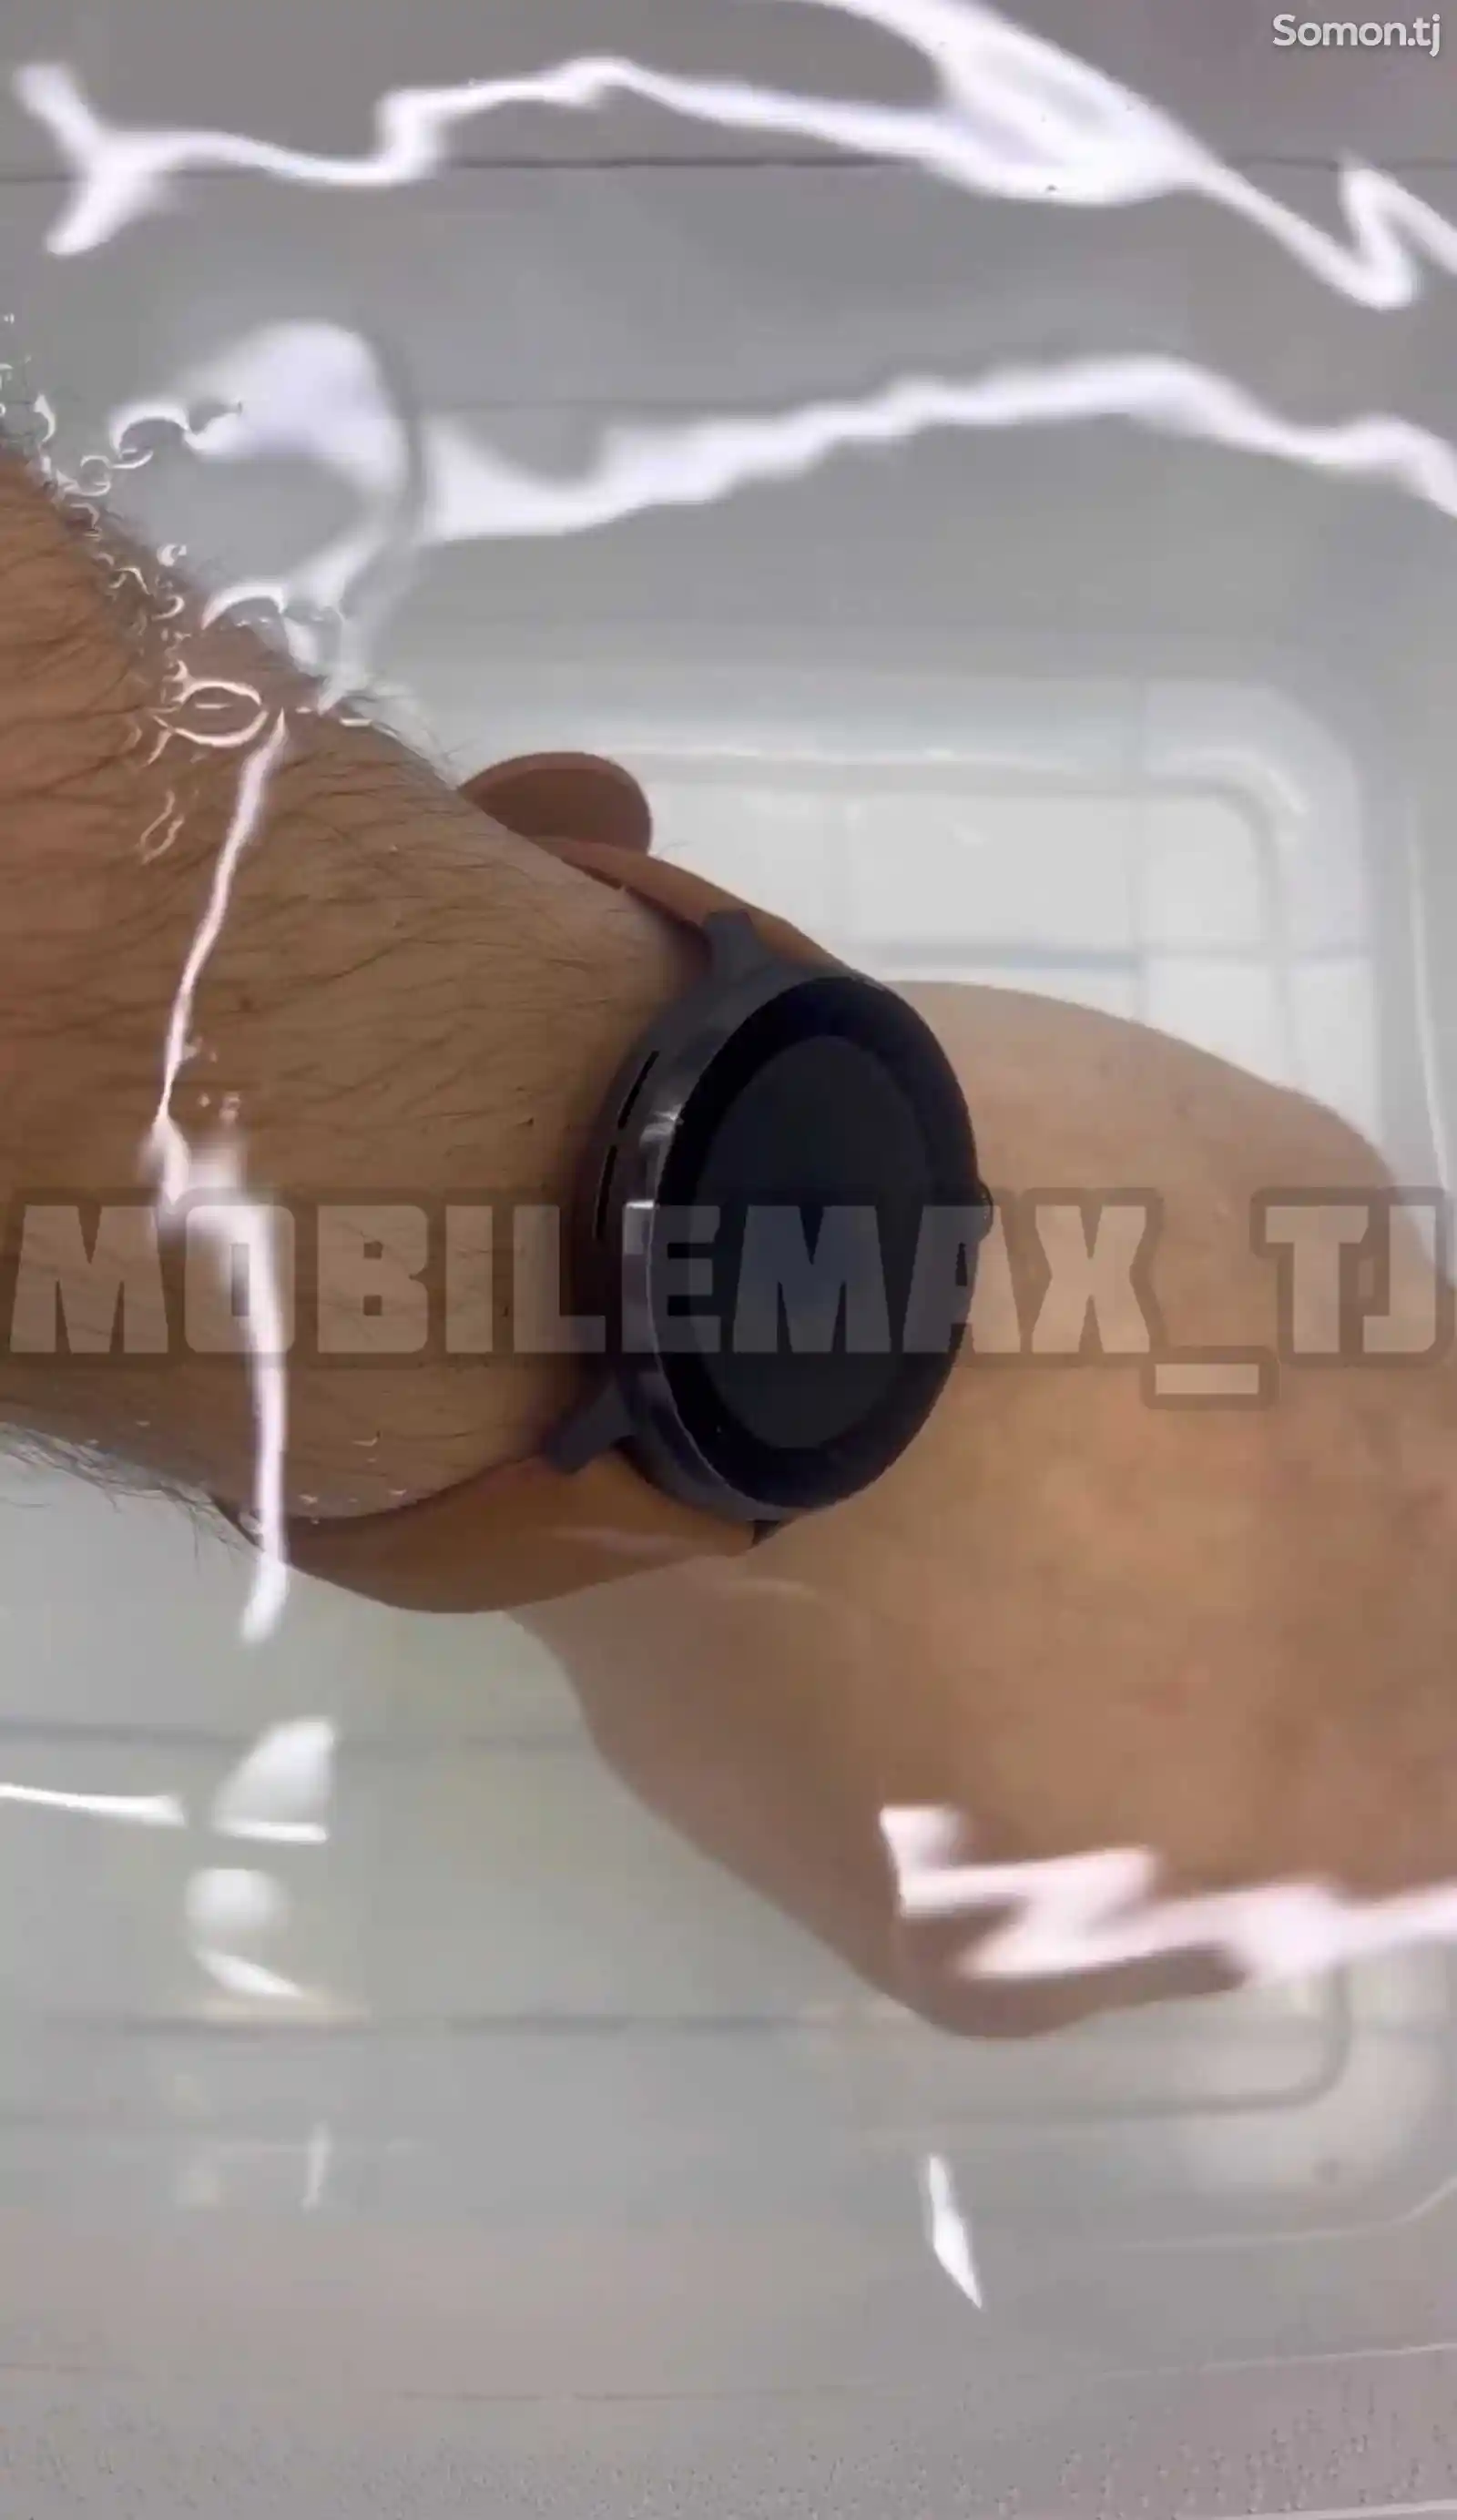 Смарт часы Xiaomi watch - mibro lite 2-11